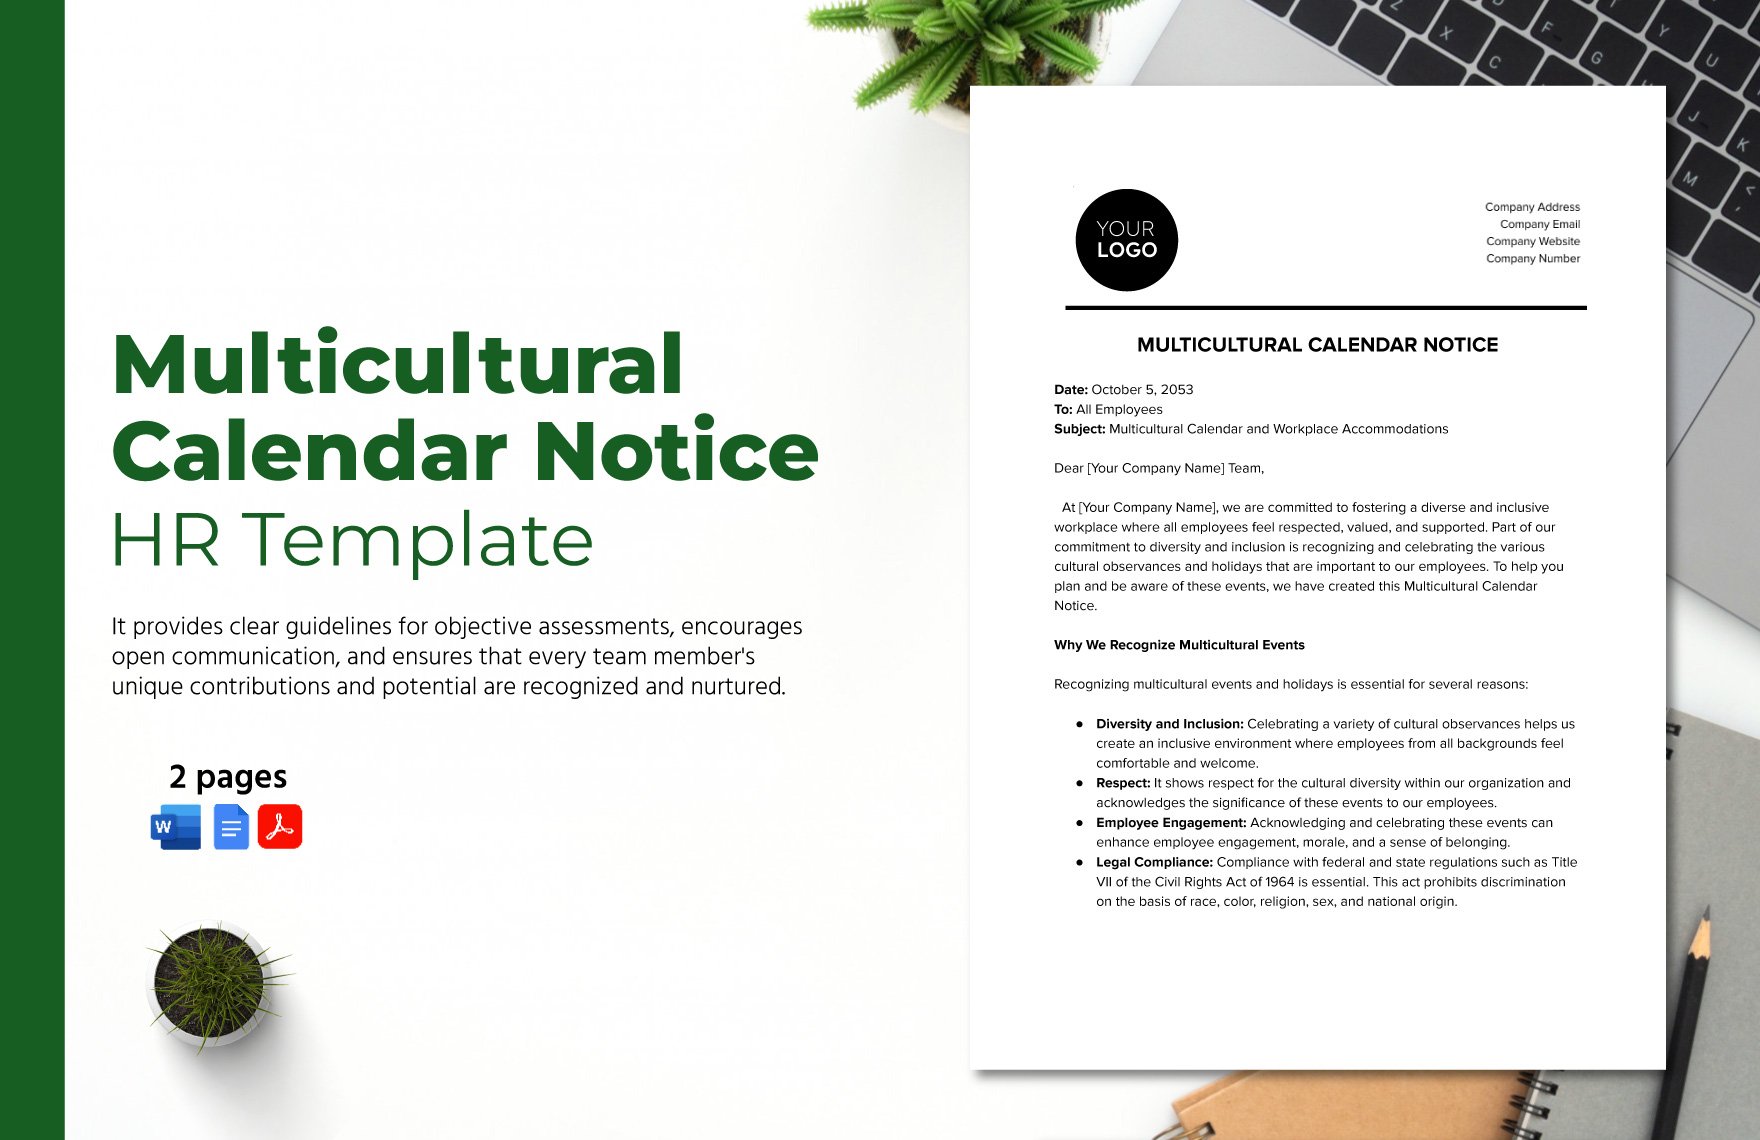 Multicultural Calendar Notice HR Template in Word, Google Docs, PDF